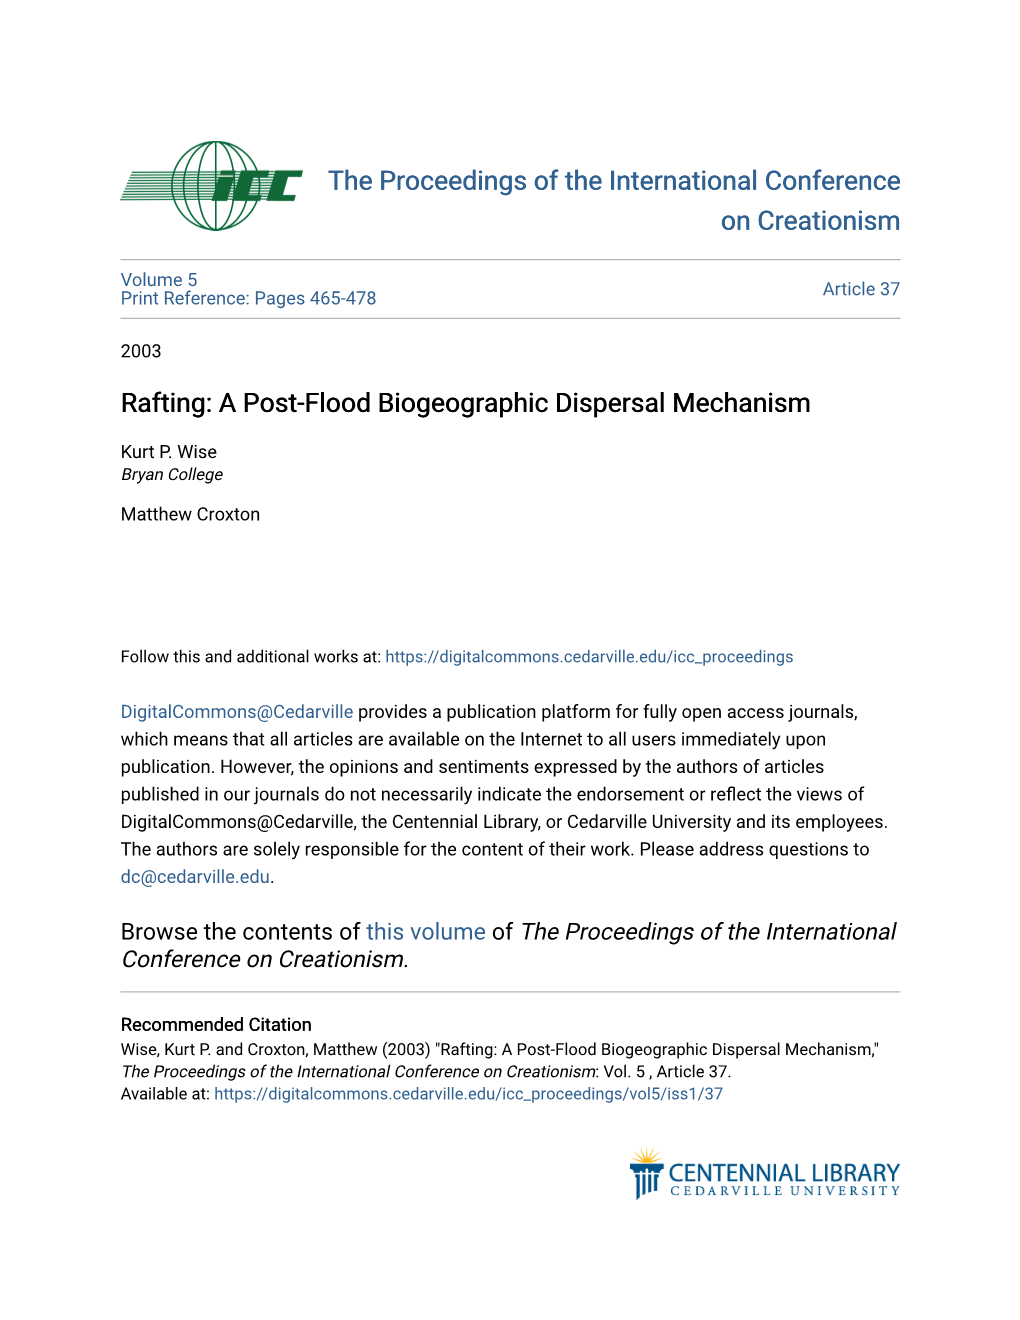 Rafting: a Post-Flood Biogeographic Dispersal Mechanism